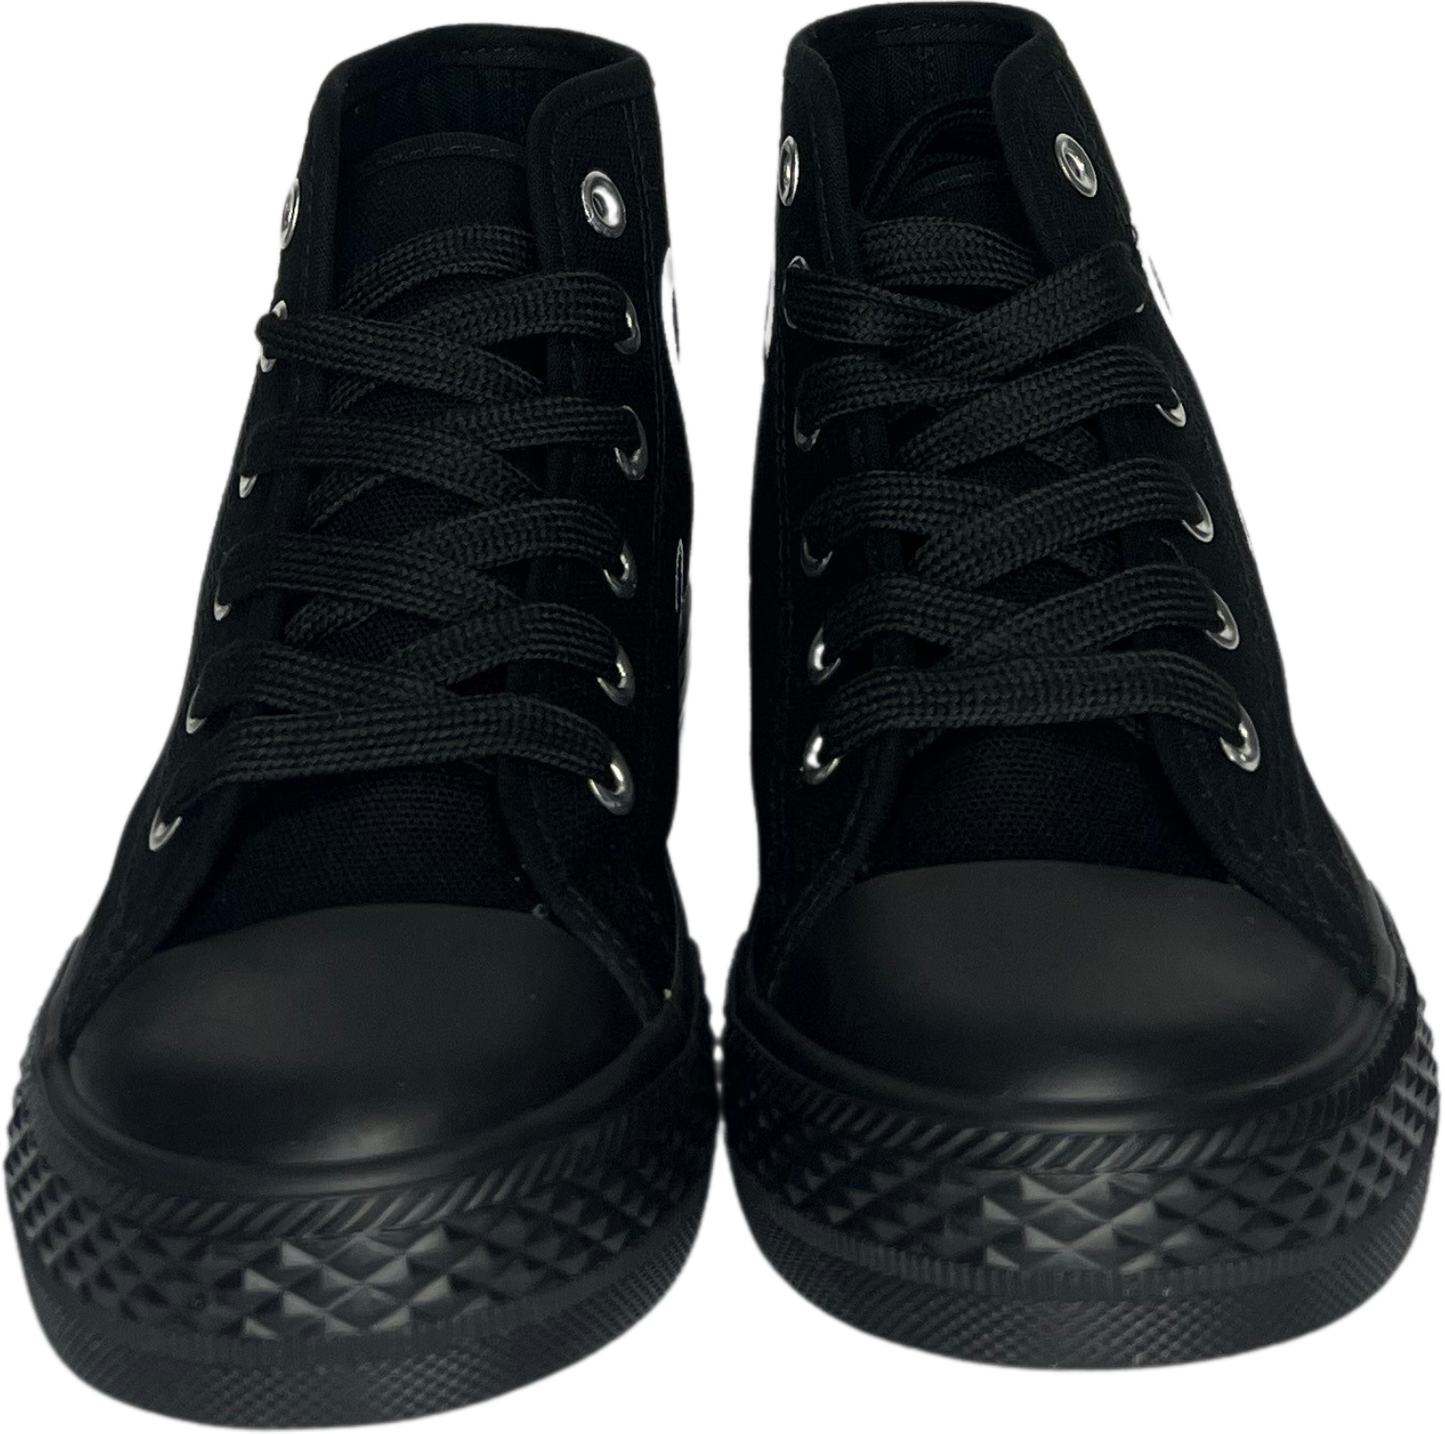 Frantz Lamour Signature Classic Men's High Top Canvas Lace Up Casual Walking Shoes - Black & White